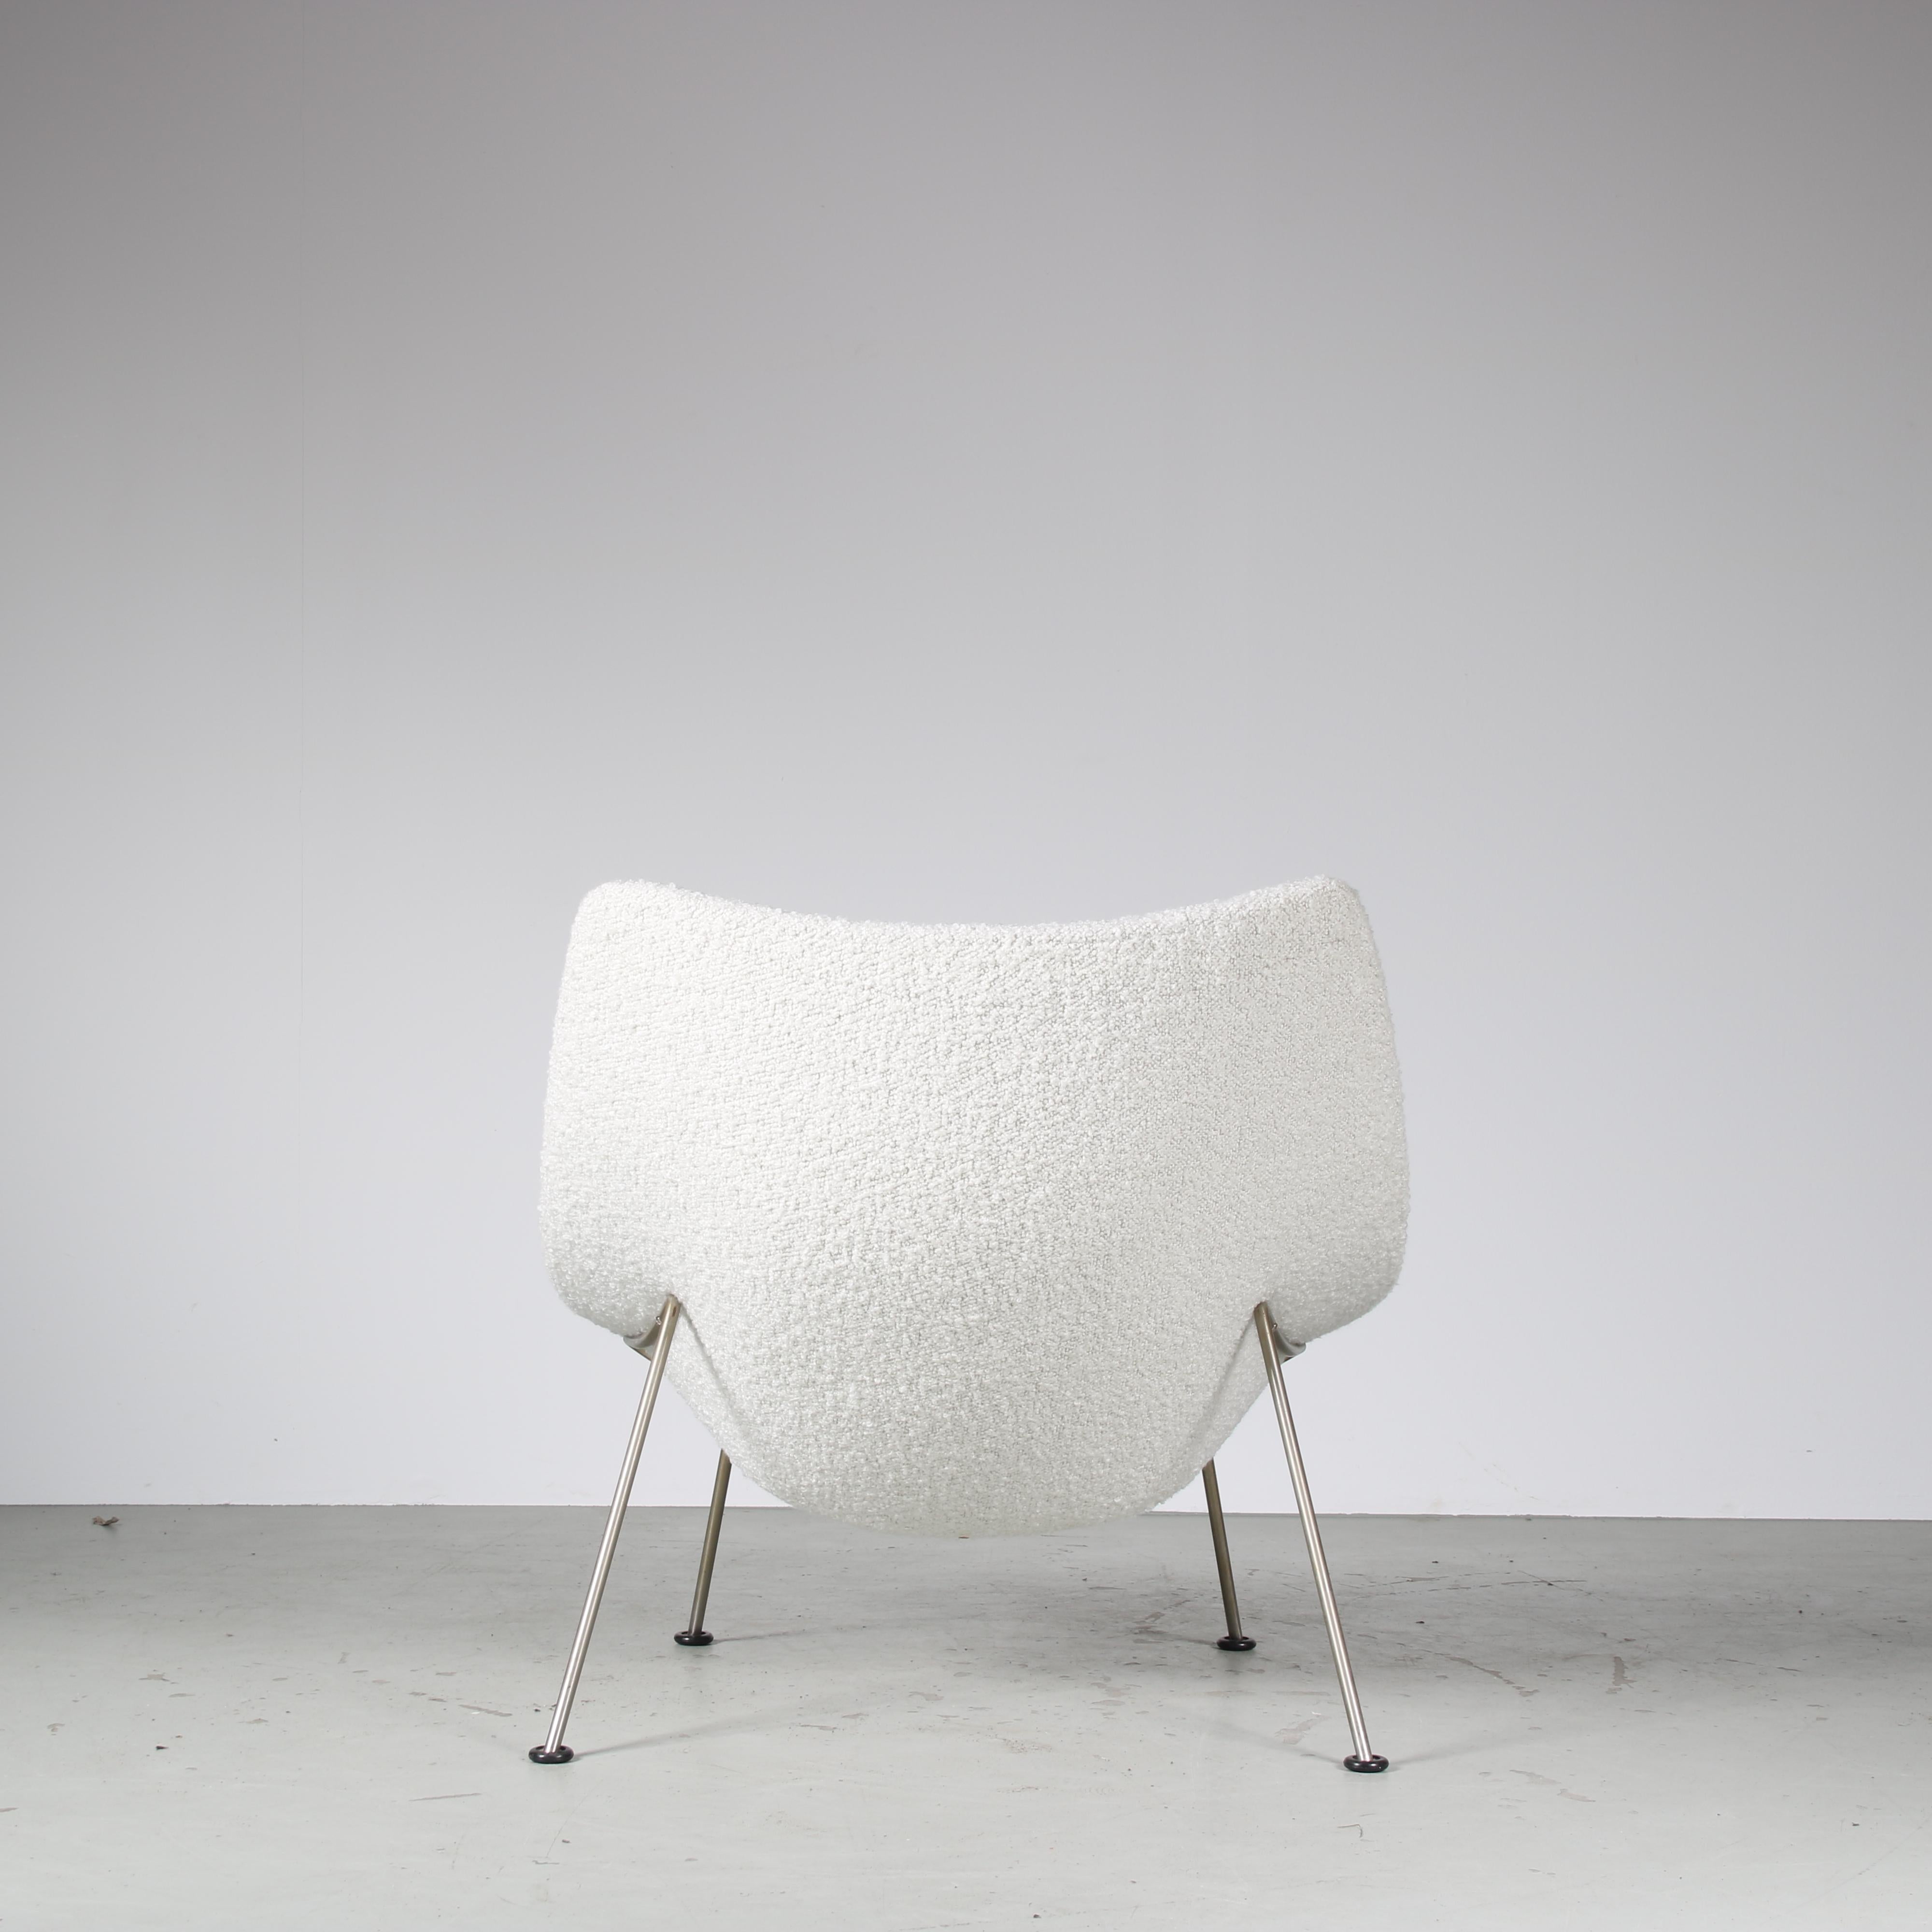 Metal Pierre Paulin “Oyster” Chair for Artifort, Netherlands 1960